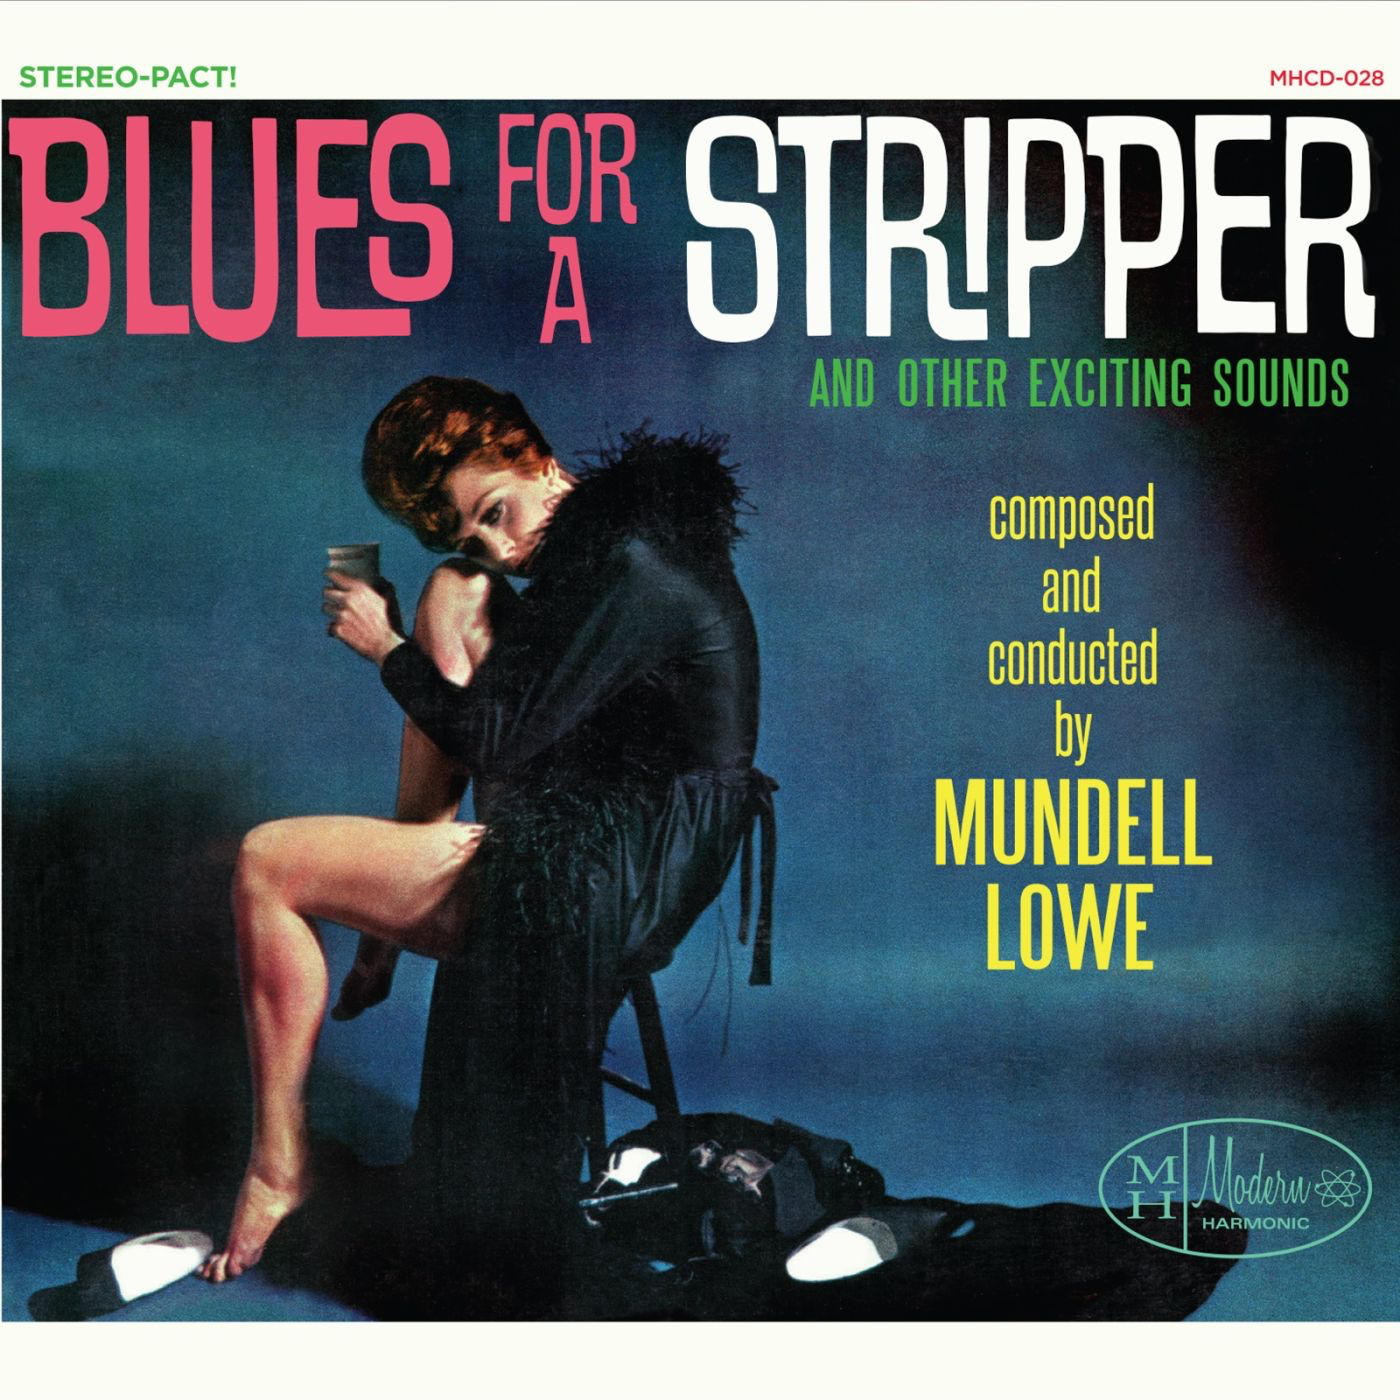 Lowe A - (CD) (CD) Stripper Mundell - For Blues